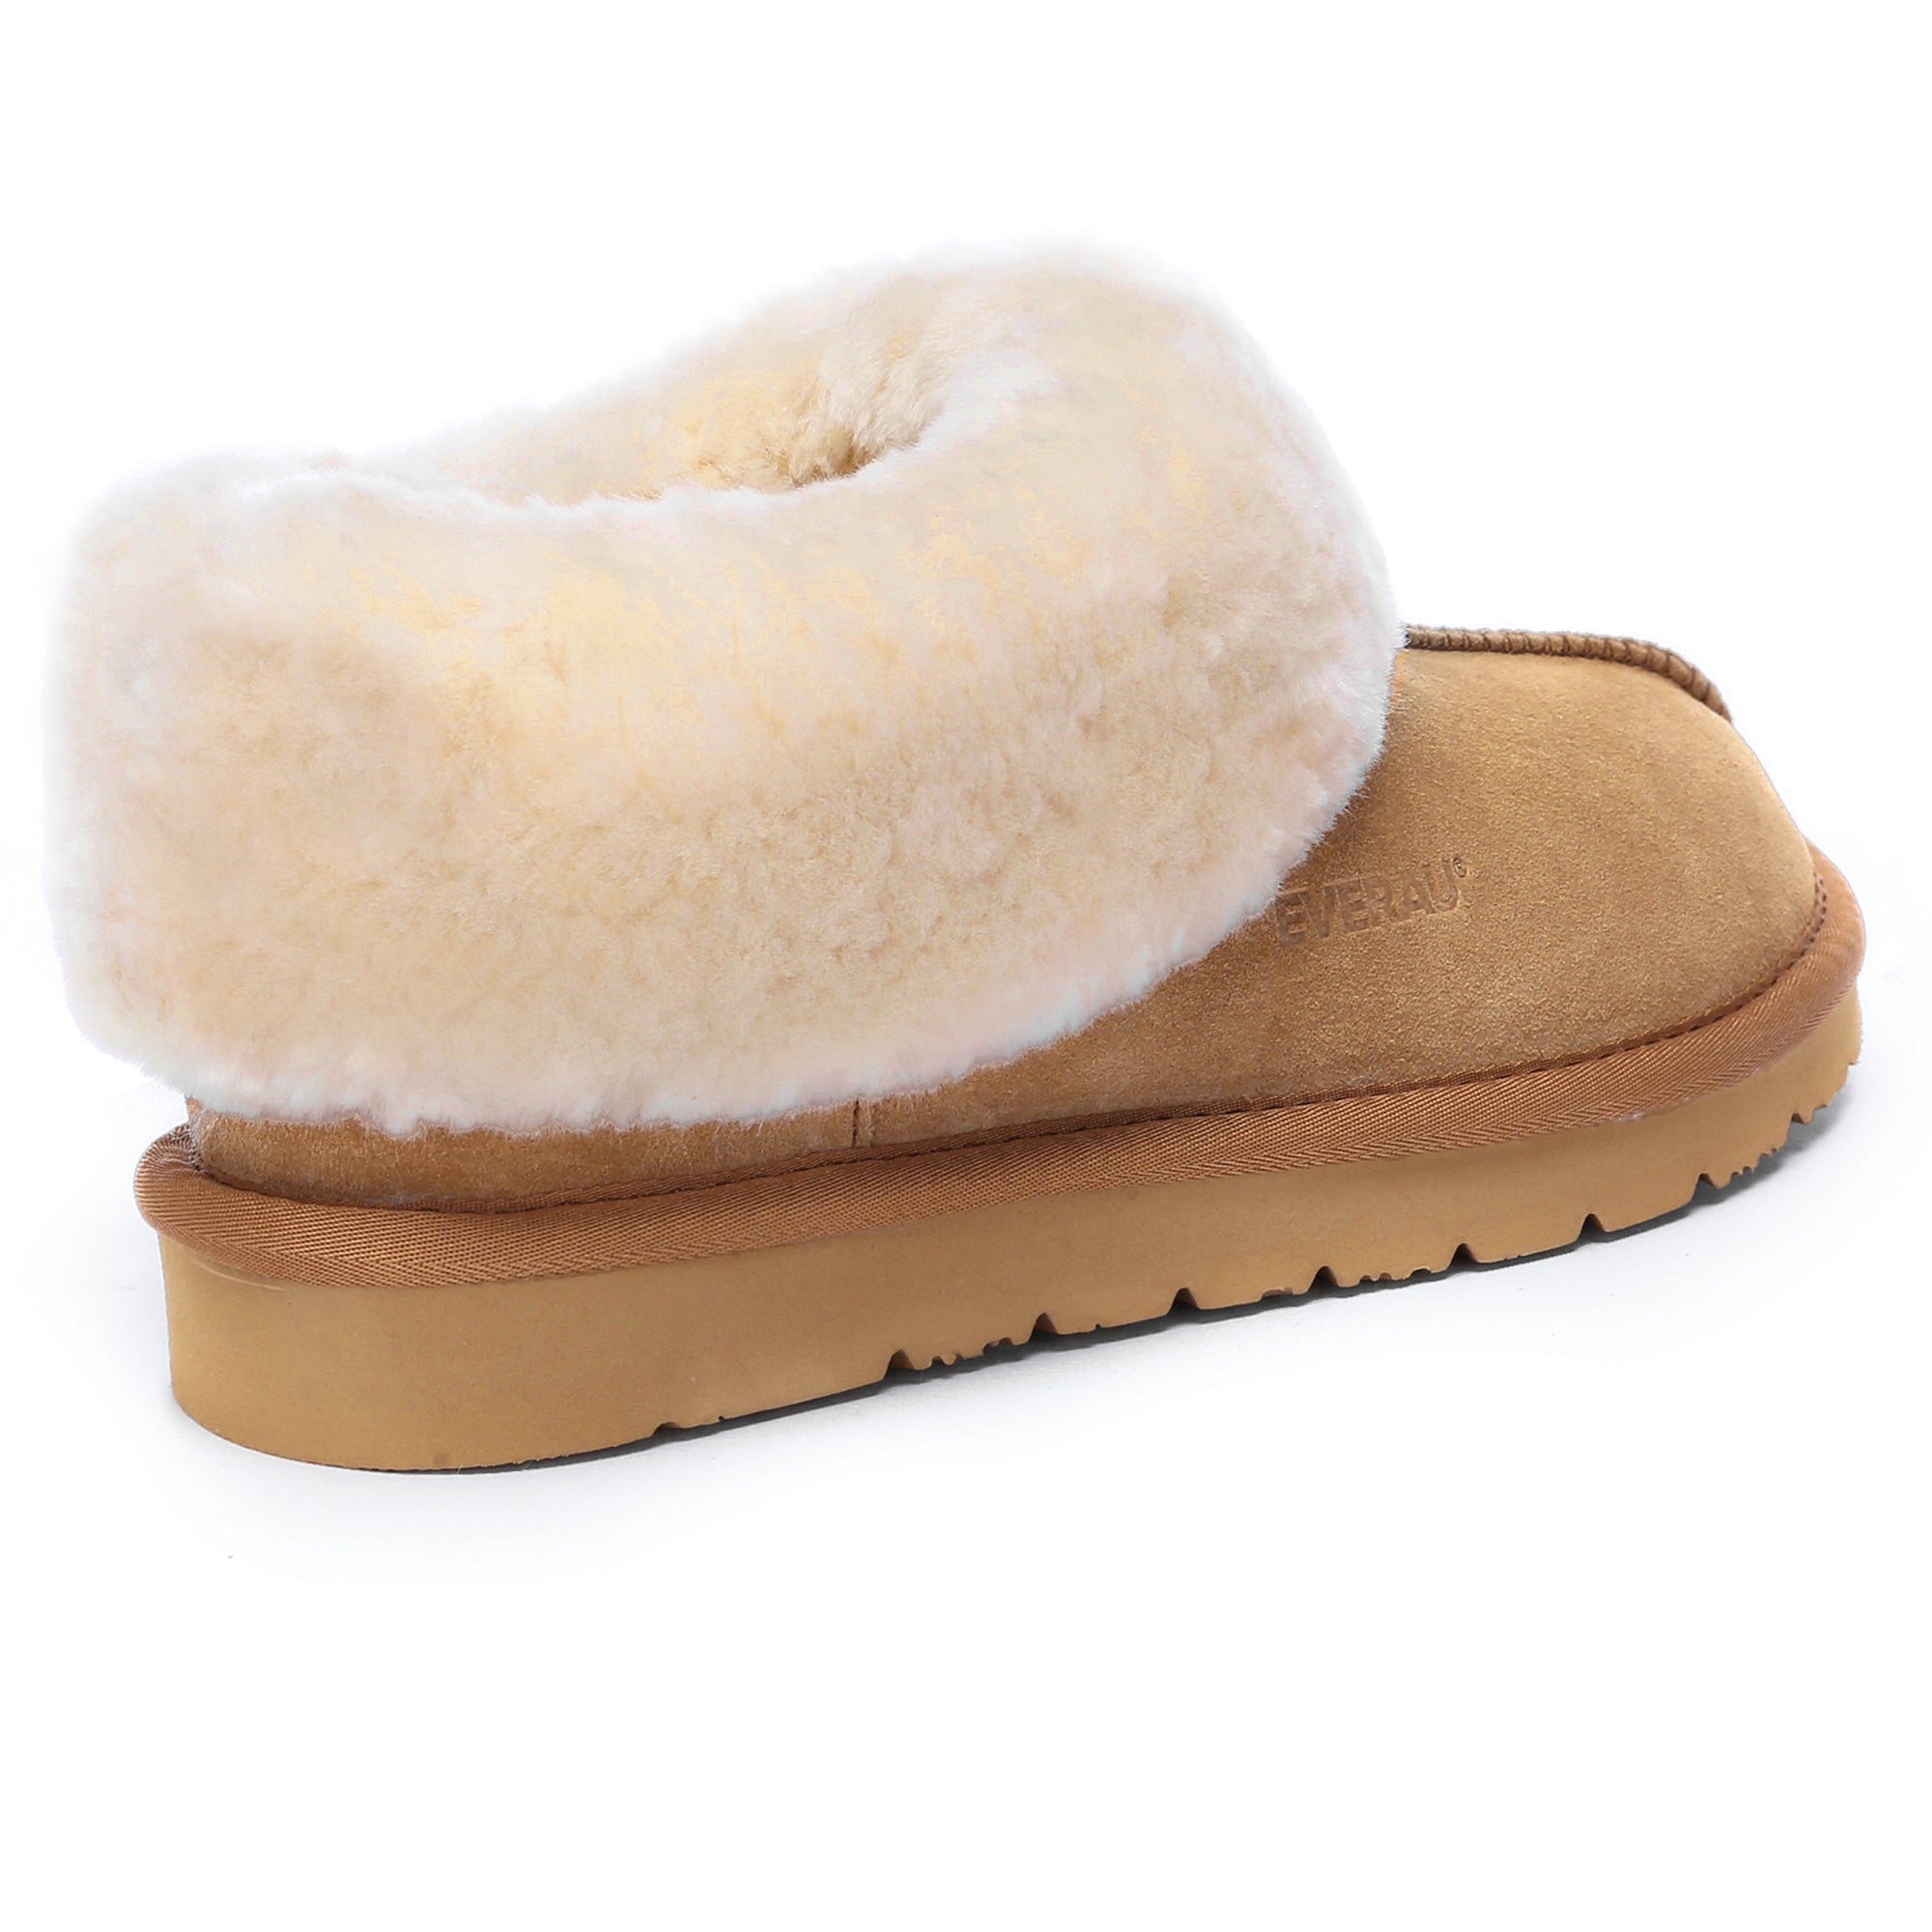 Homey Sheepskin Winter Slippers